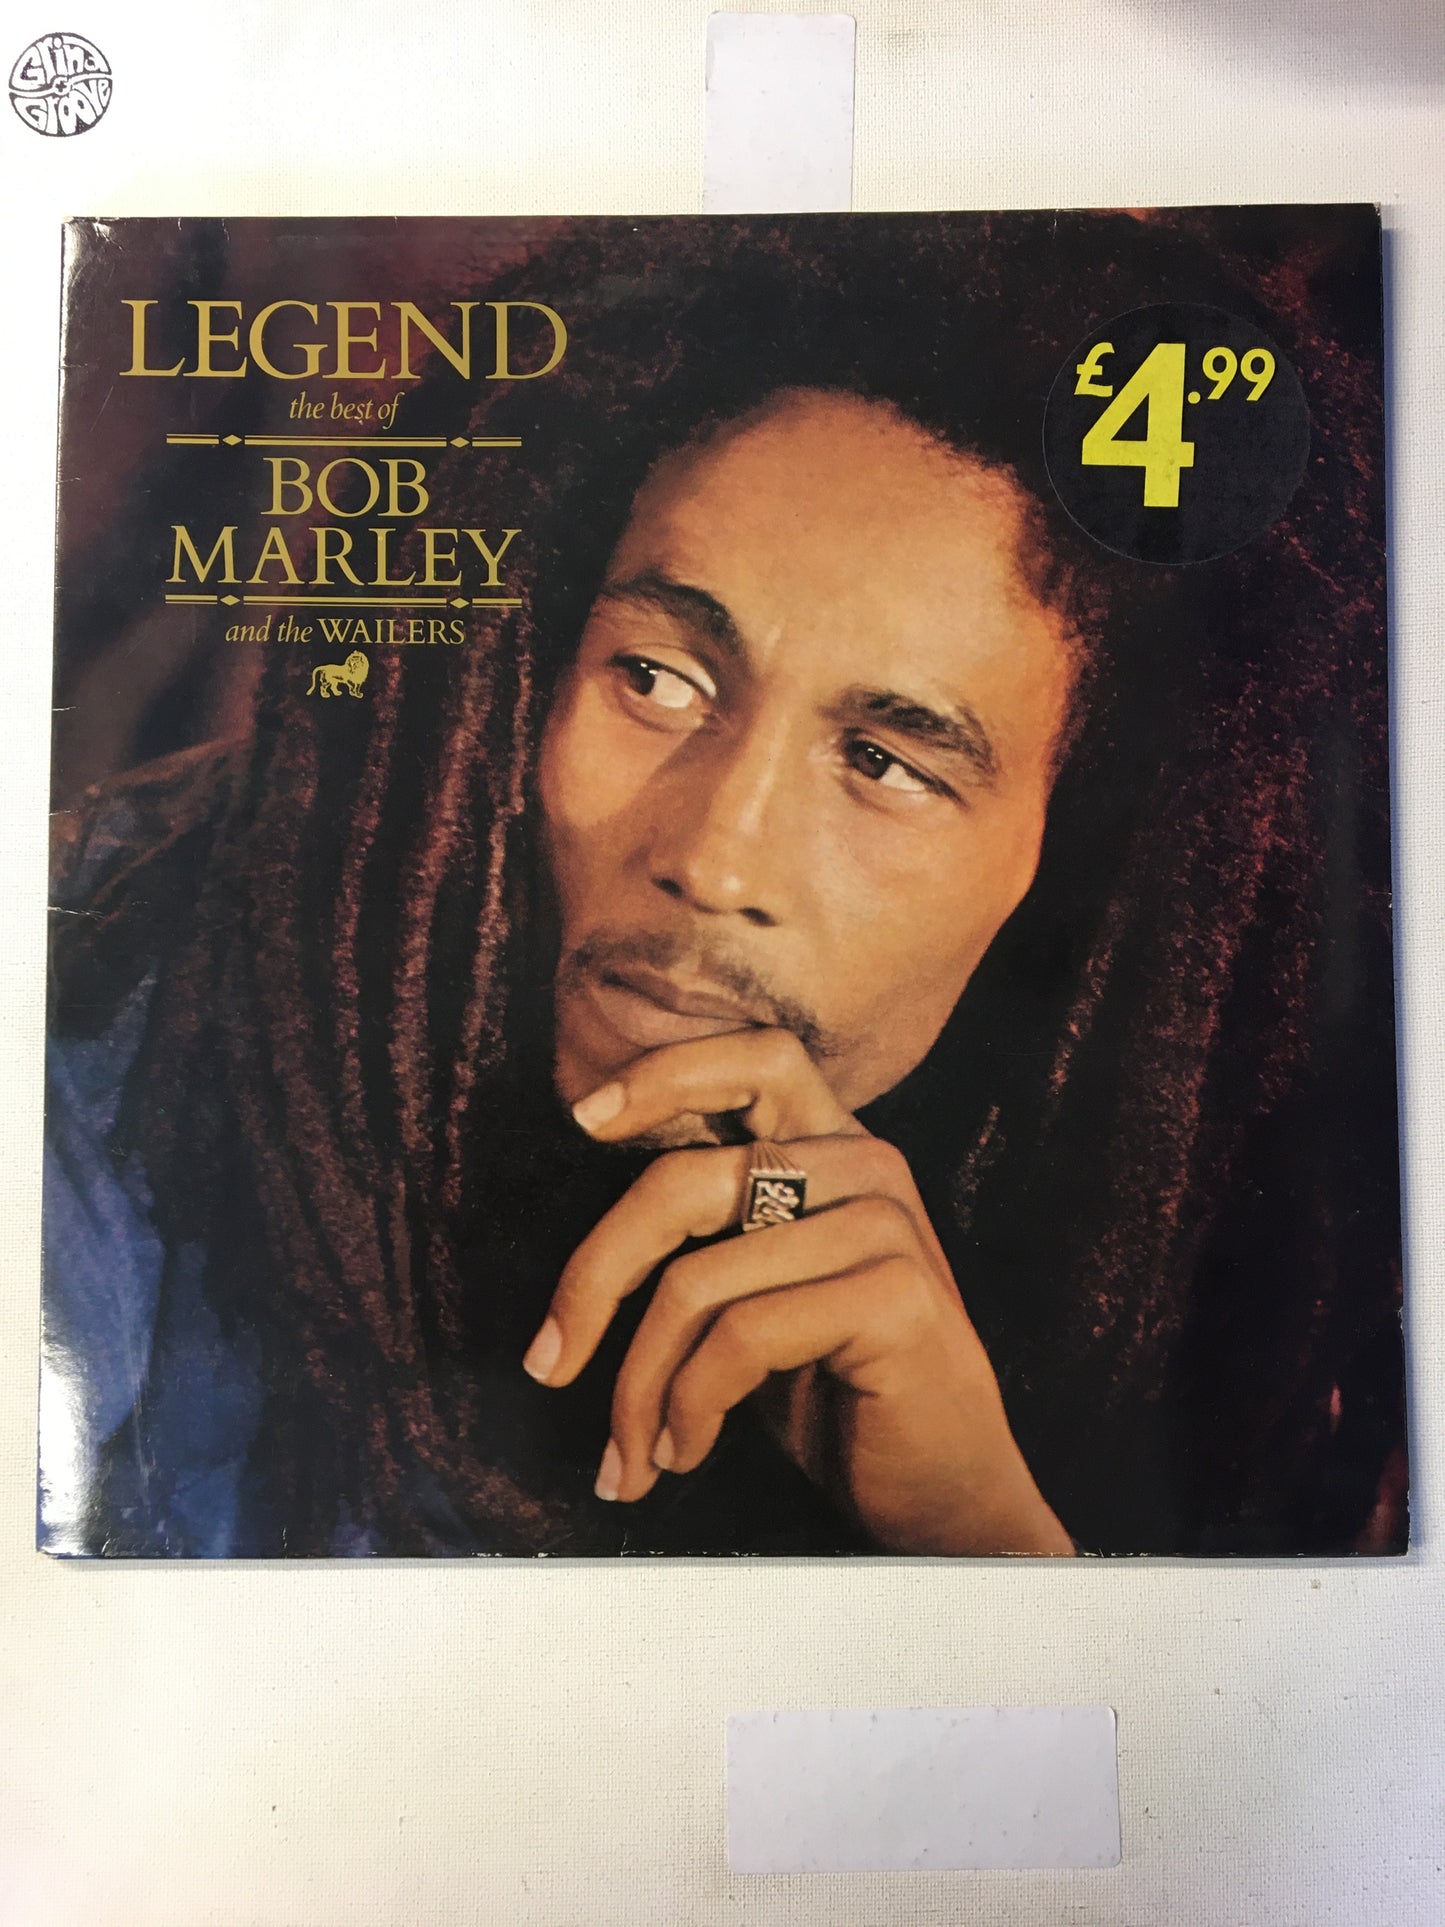 BOB MARLEY & THE WAILERS LP ‘ LEGEND